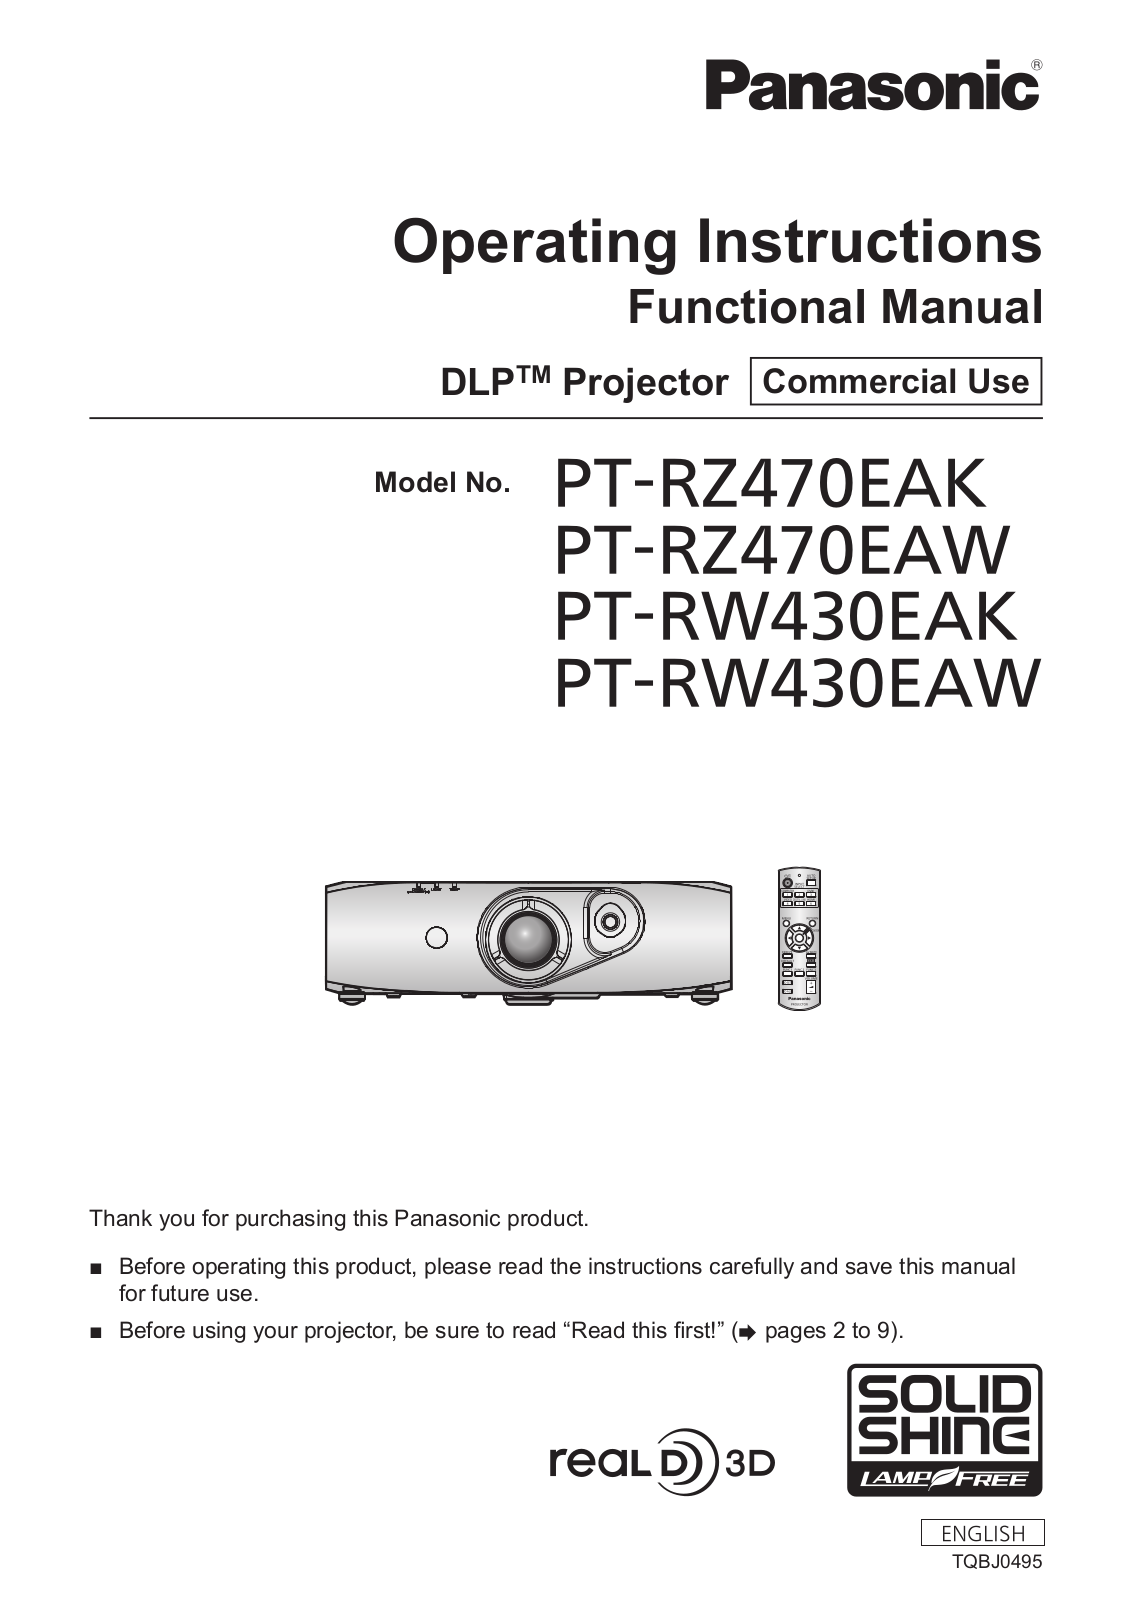 Panasonic PT-RW430EAK, PT-RW430EAW, PT-RZ470EAK, PT-RZ470EAW Operating Instruction